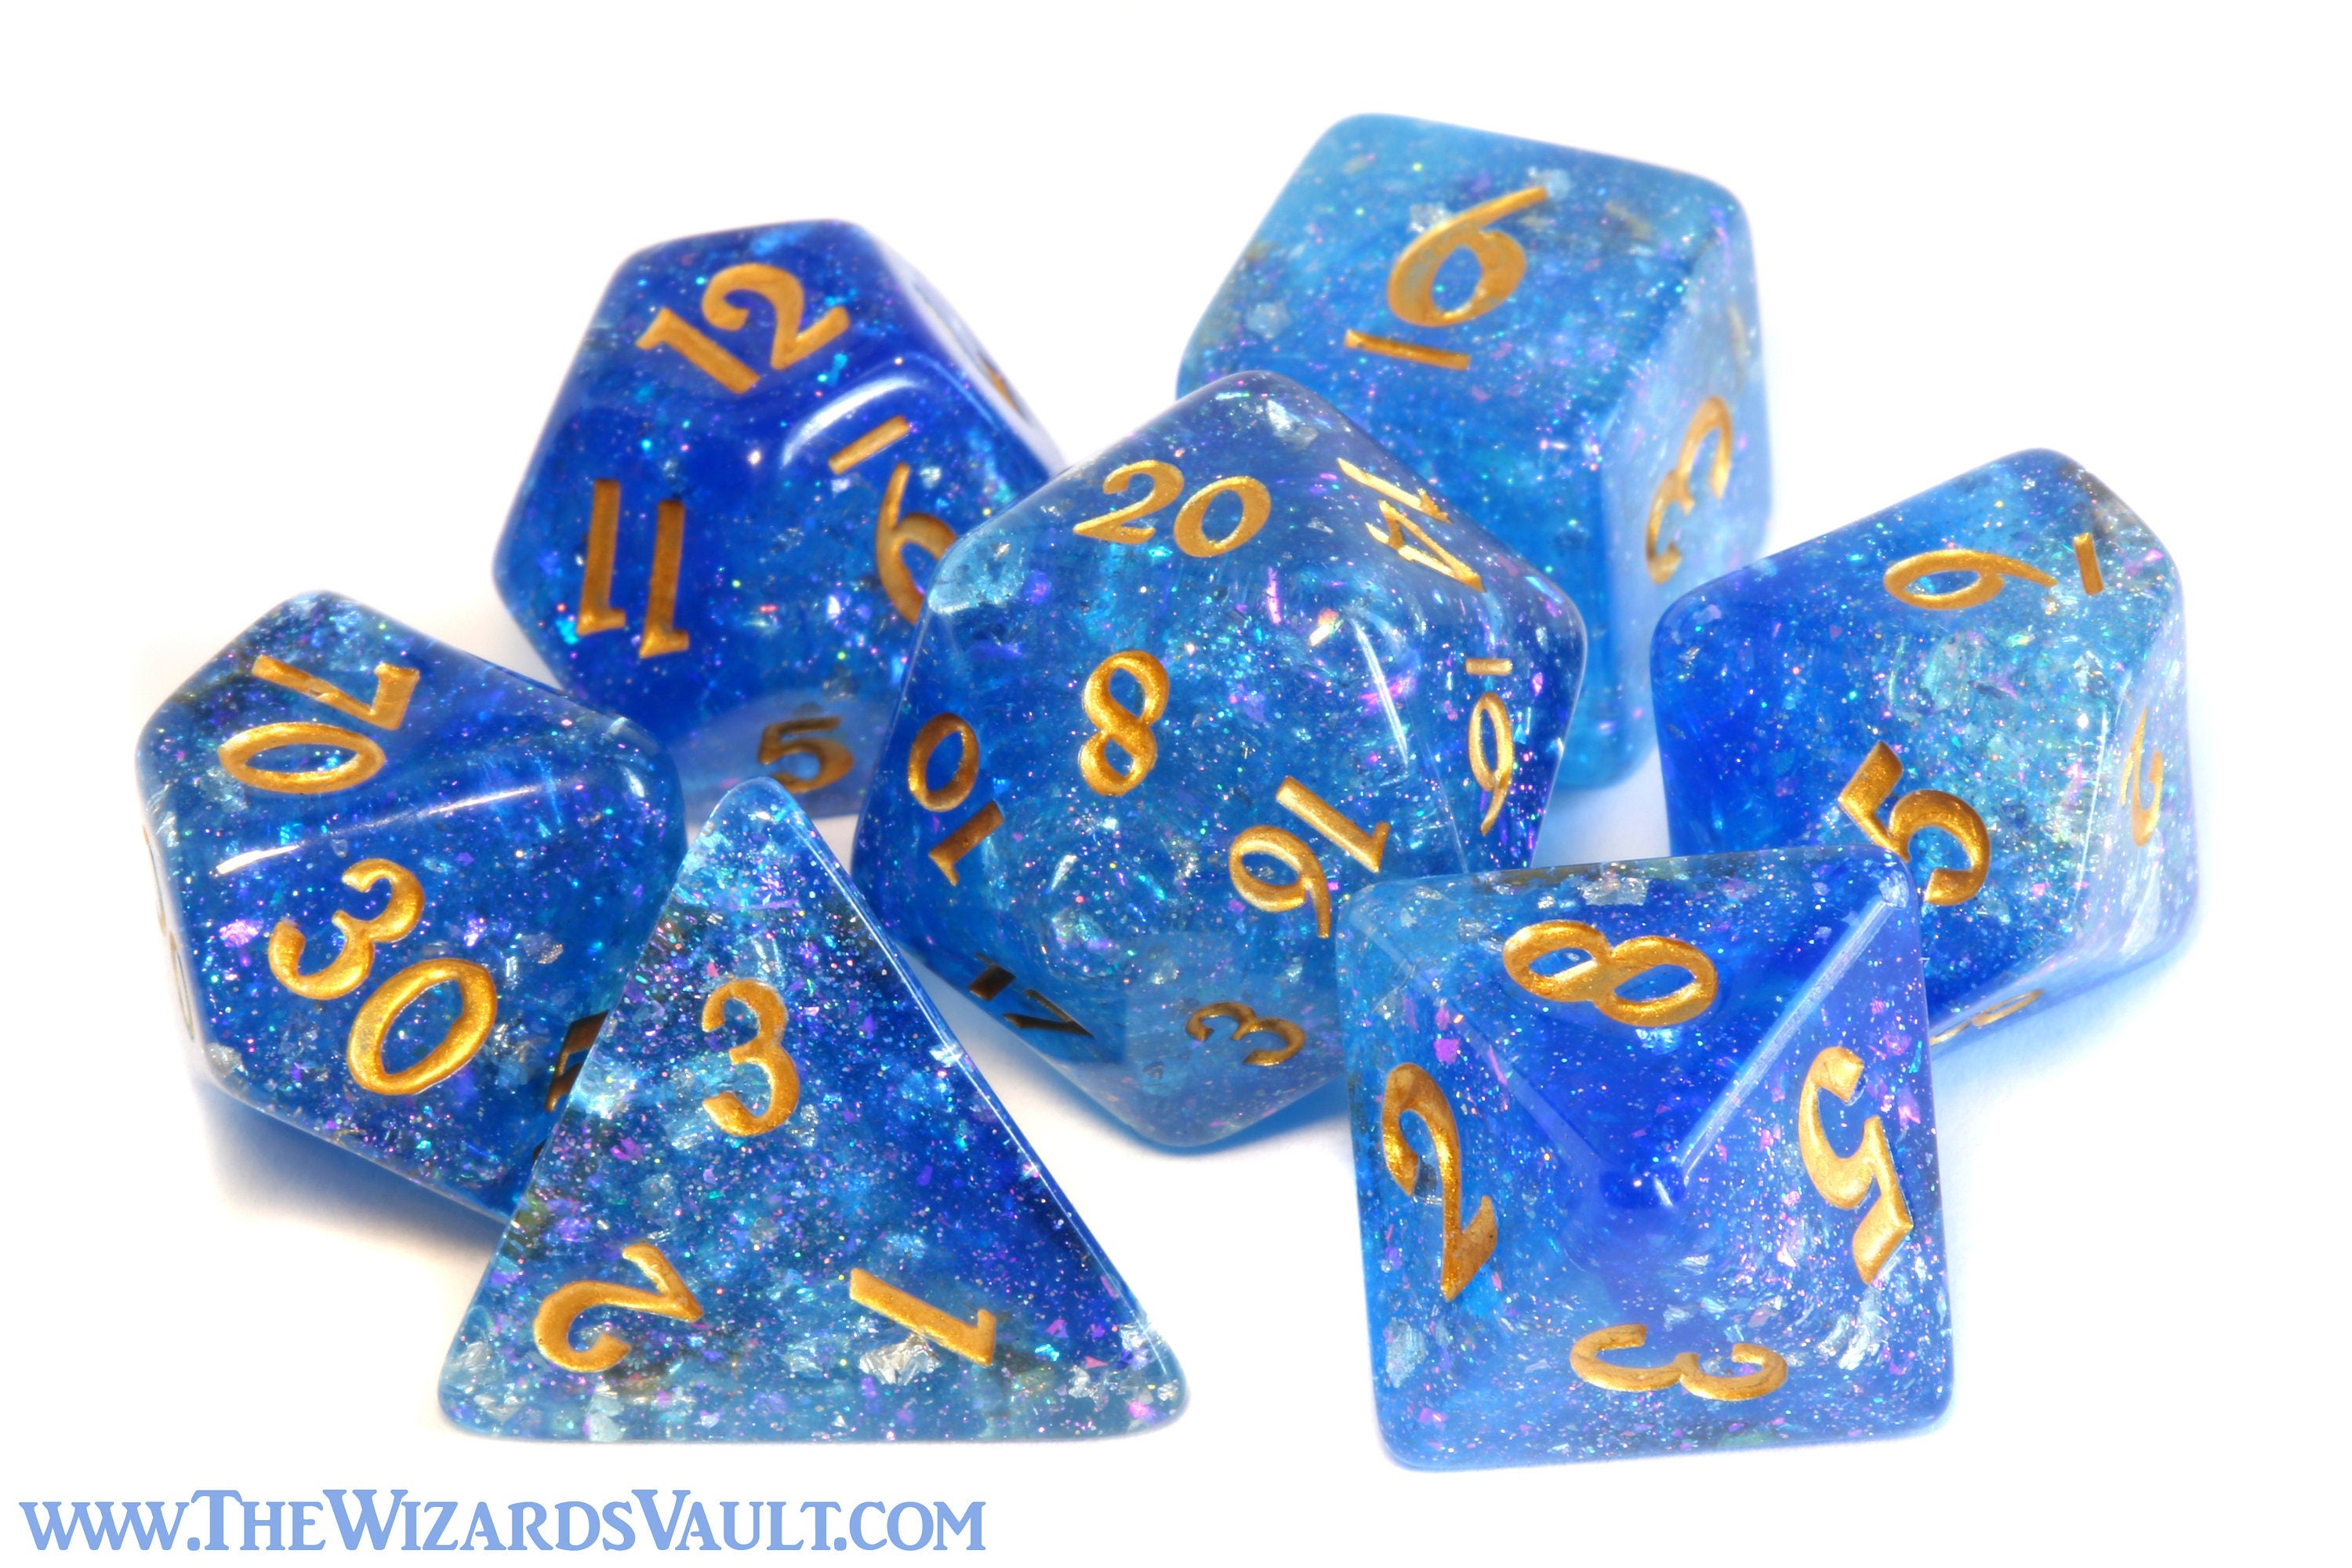 Lunar Dragon dice box with galactic Sapphire dice set